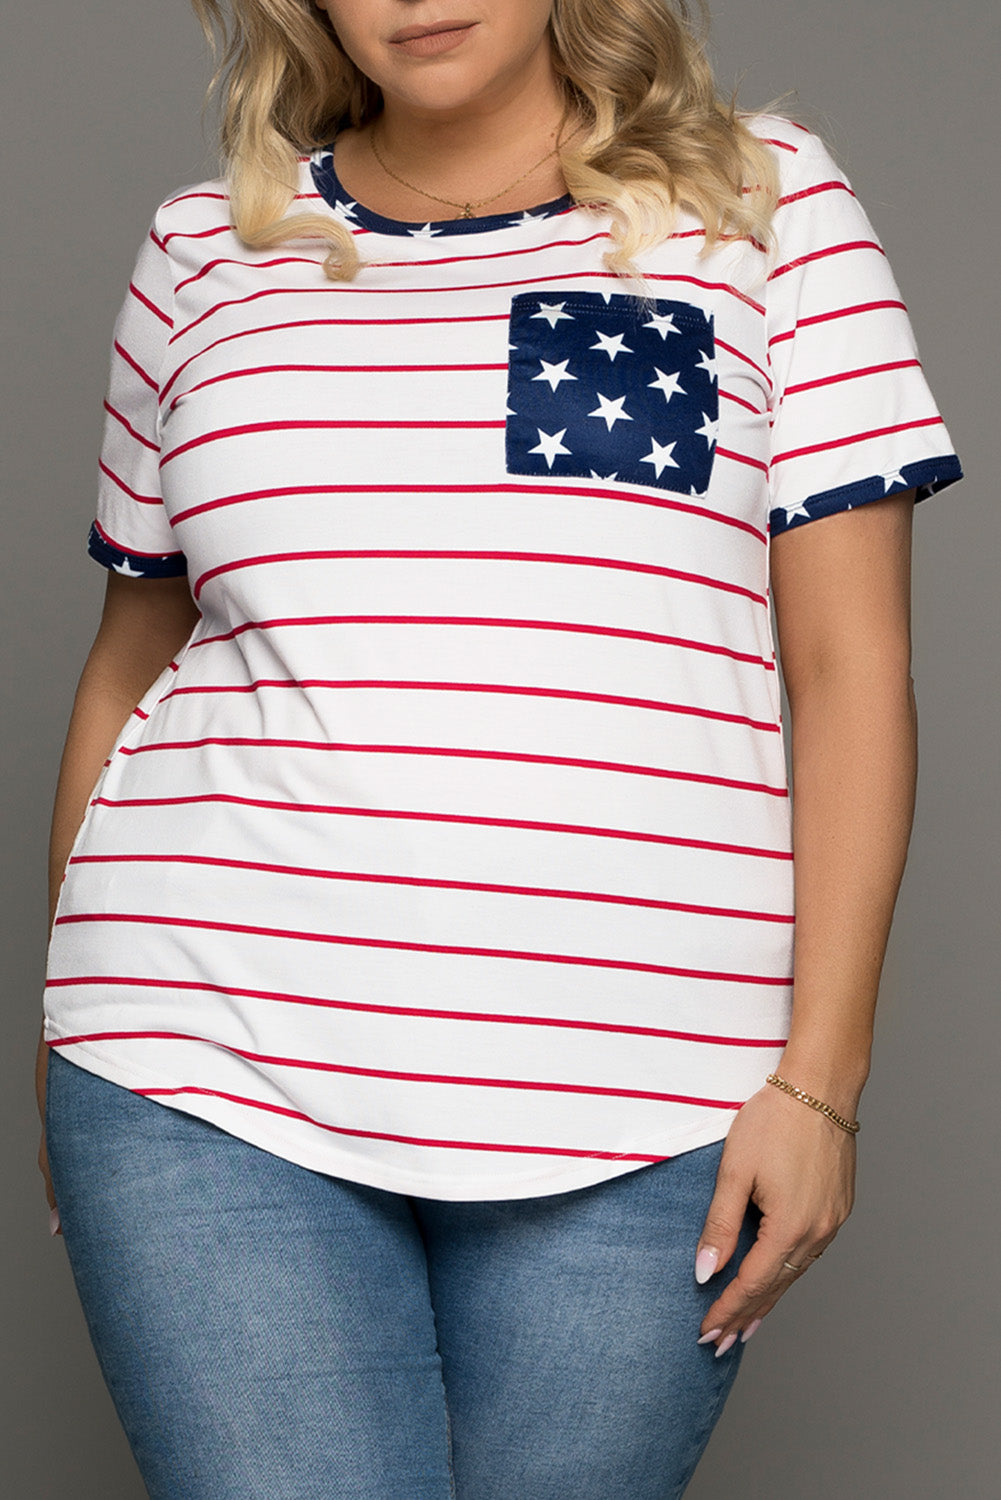 Stripes & Stars Plus Size T-shirt Plus Size Tops Magenerations